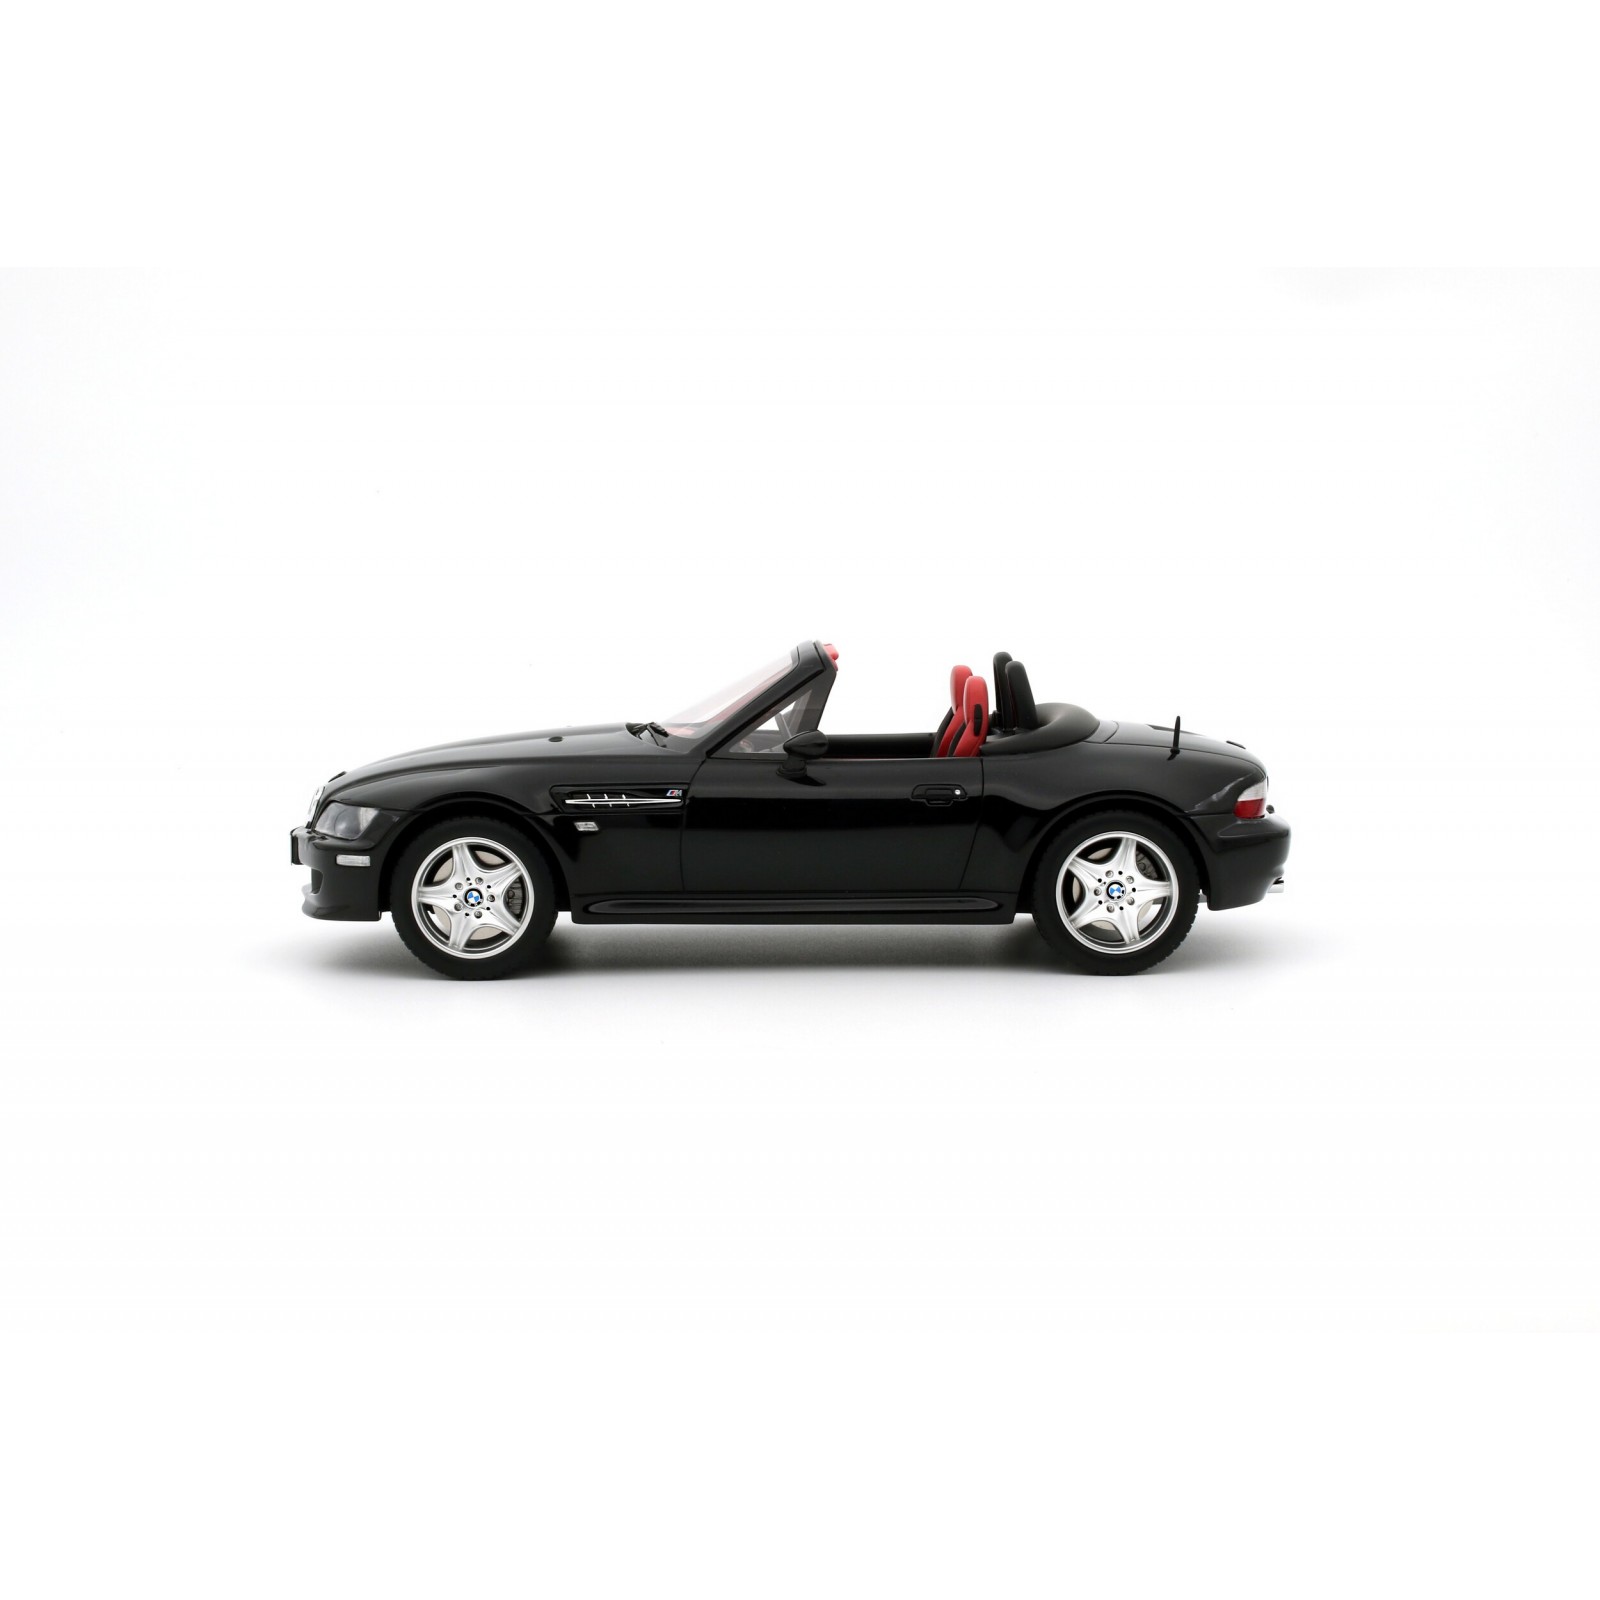 The BMW Z3 M Roadster